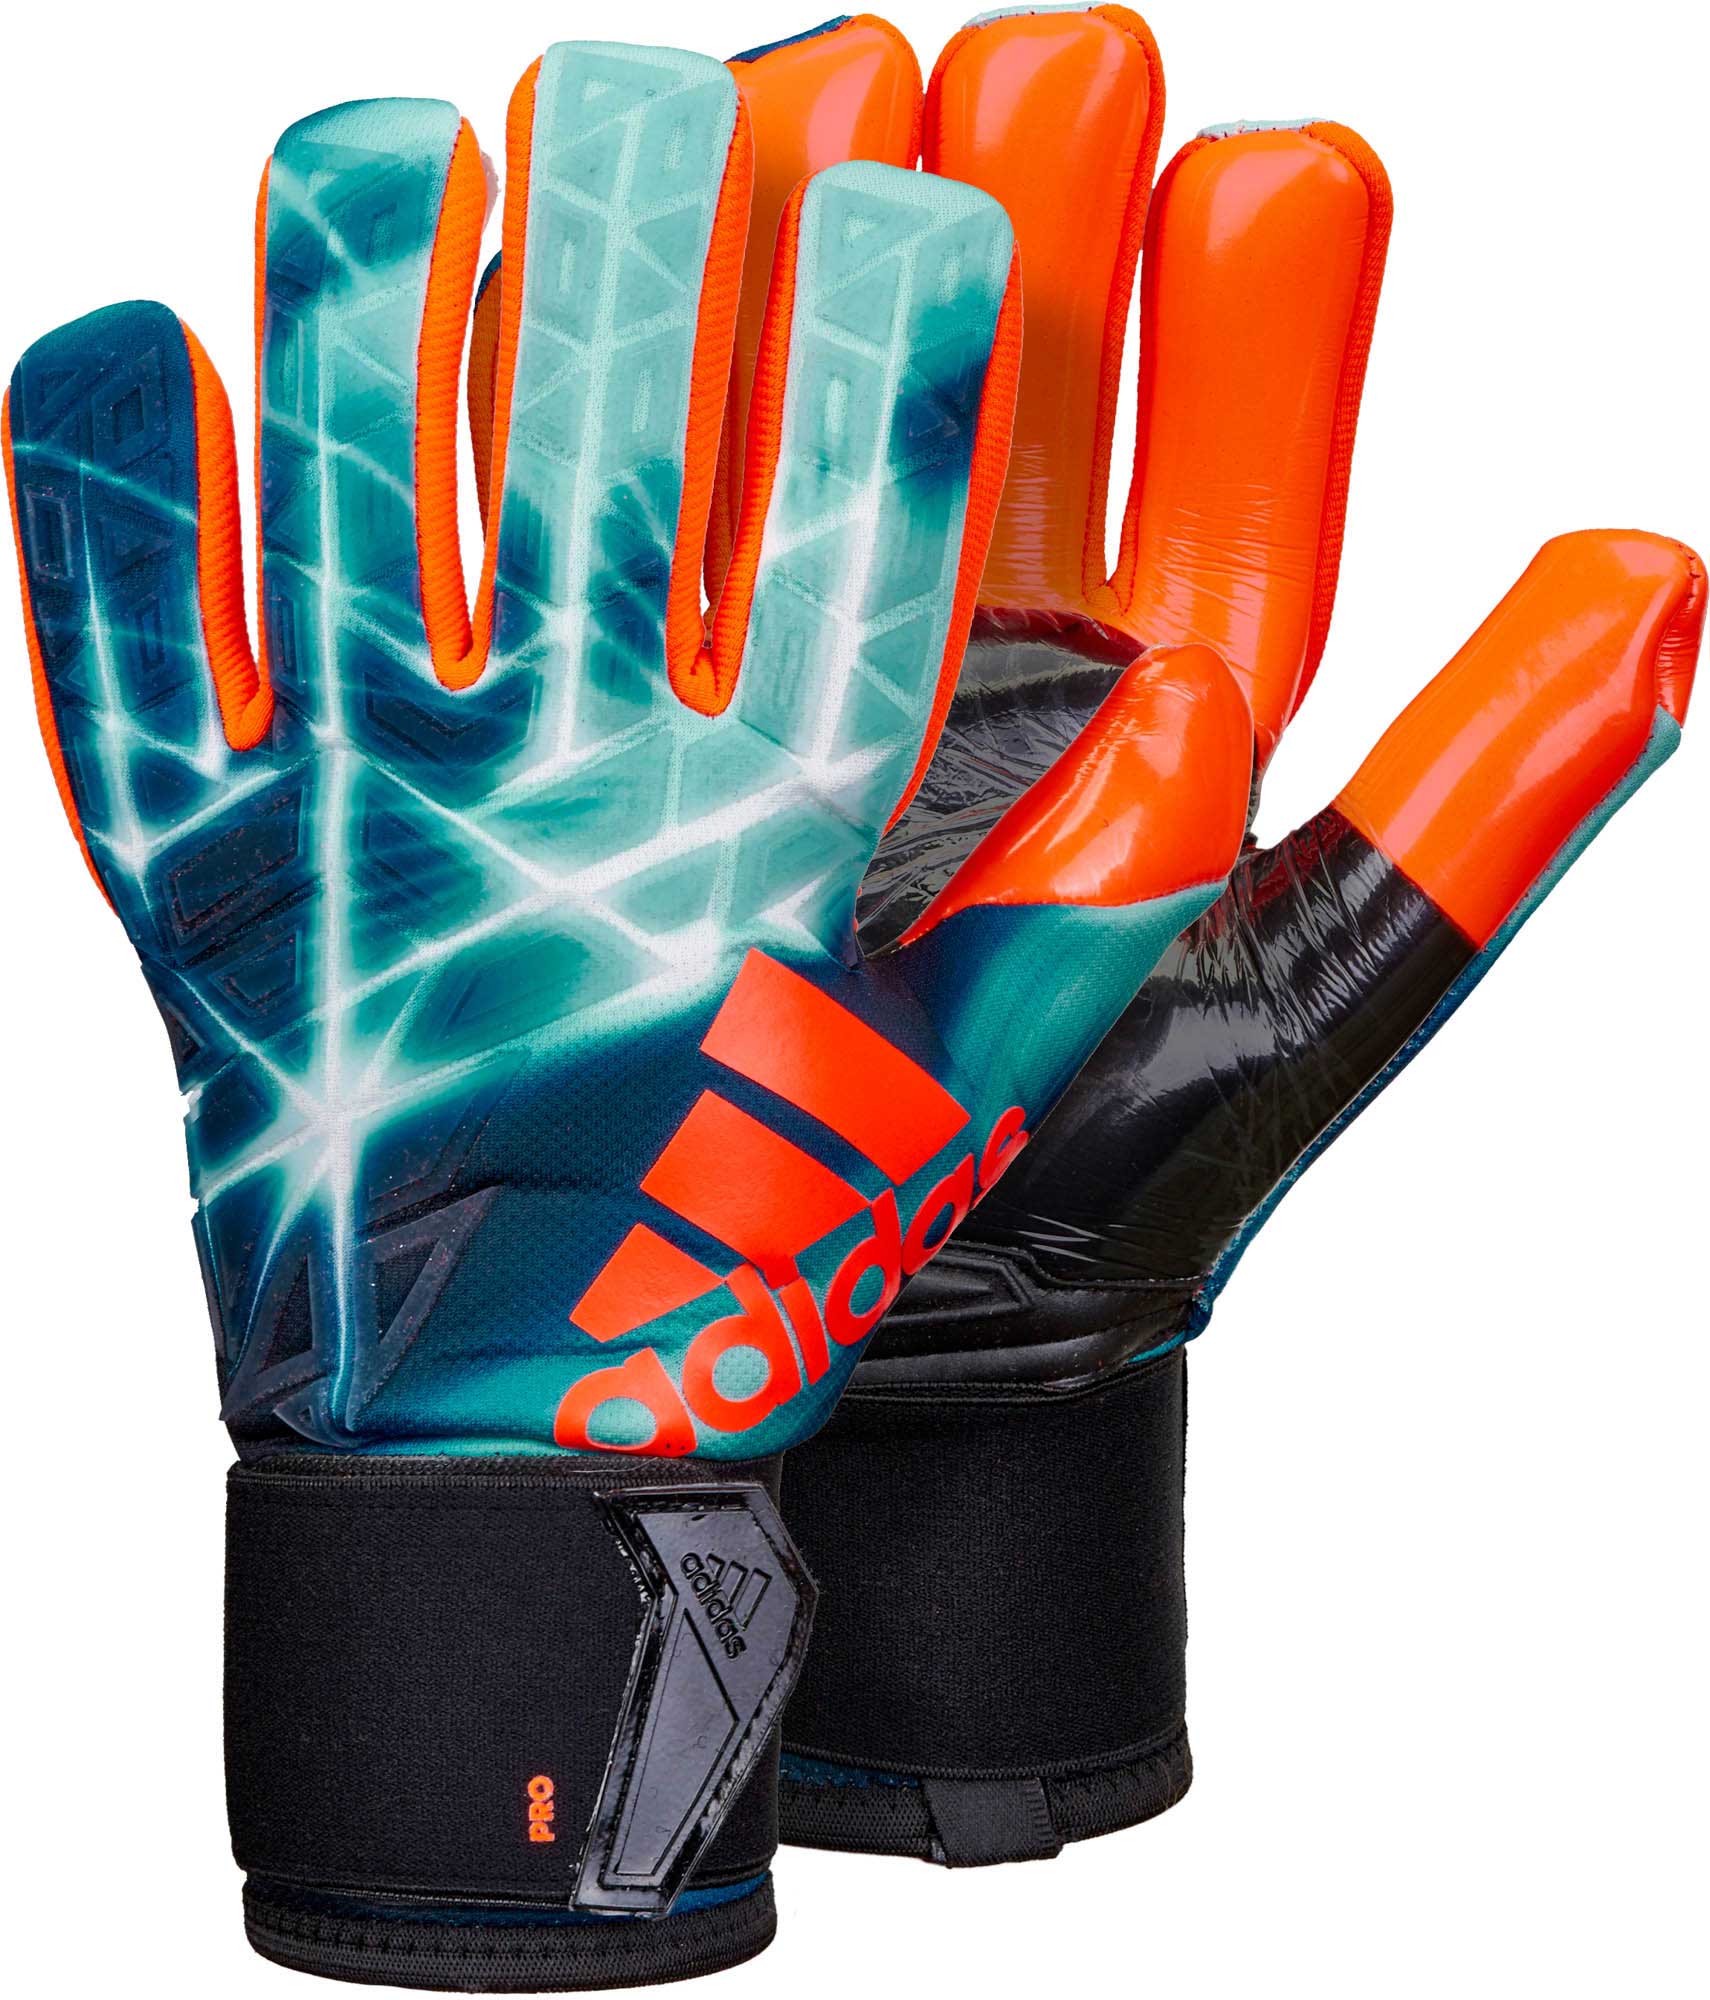 adidas pro goalie gloves